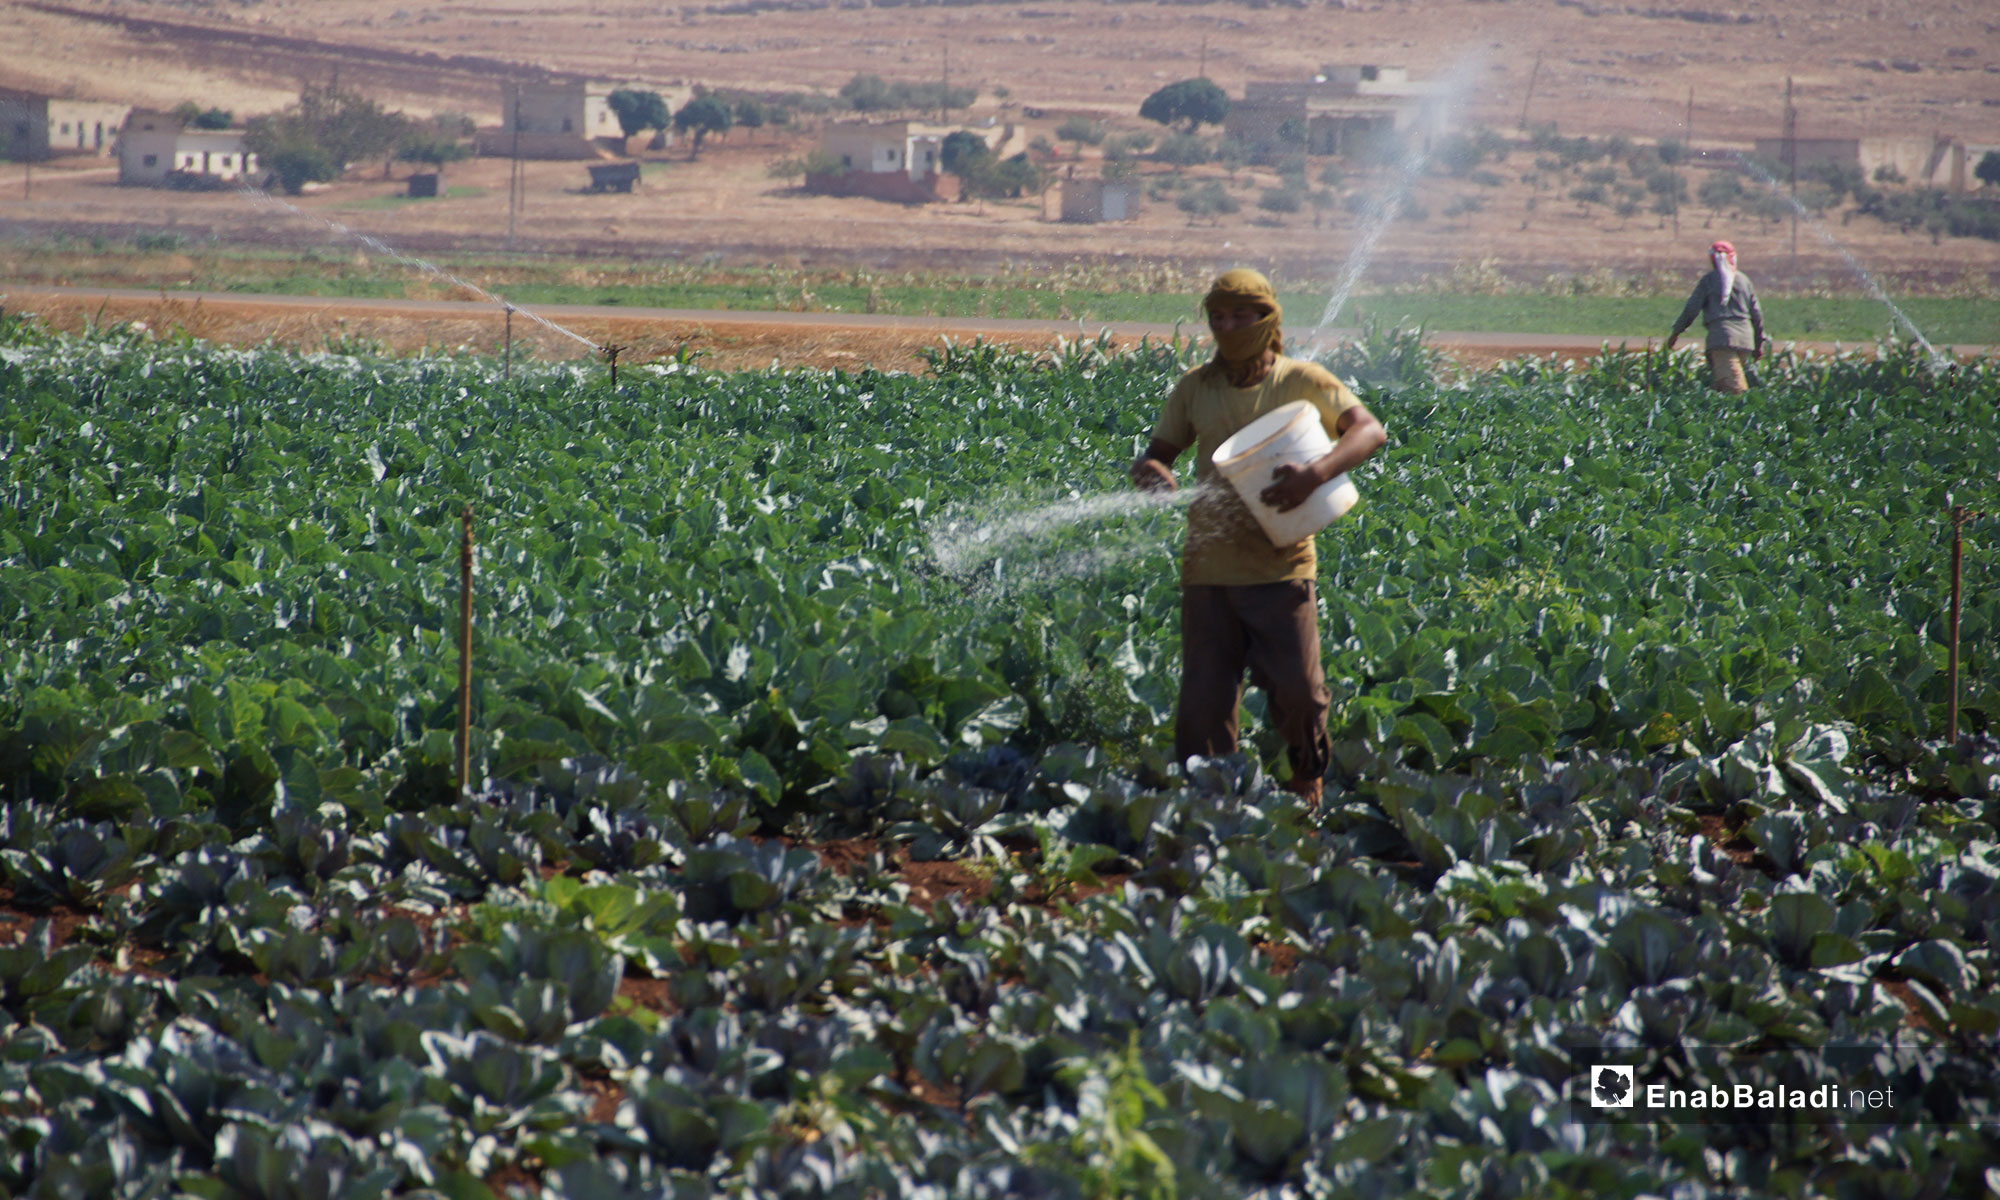 Planting vegetables in Hama countryside - 29 August 2018 (Enab Baladi)